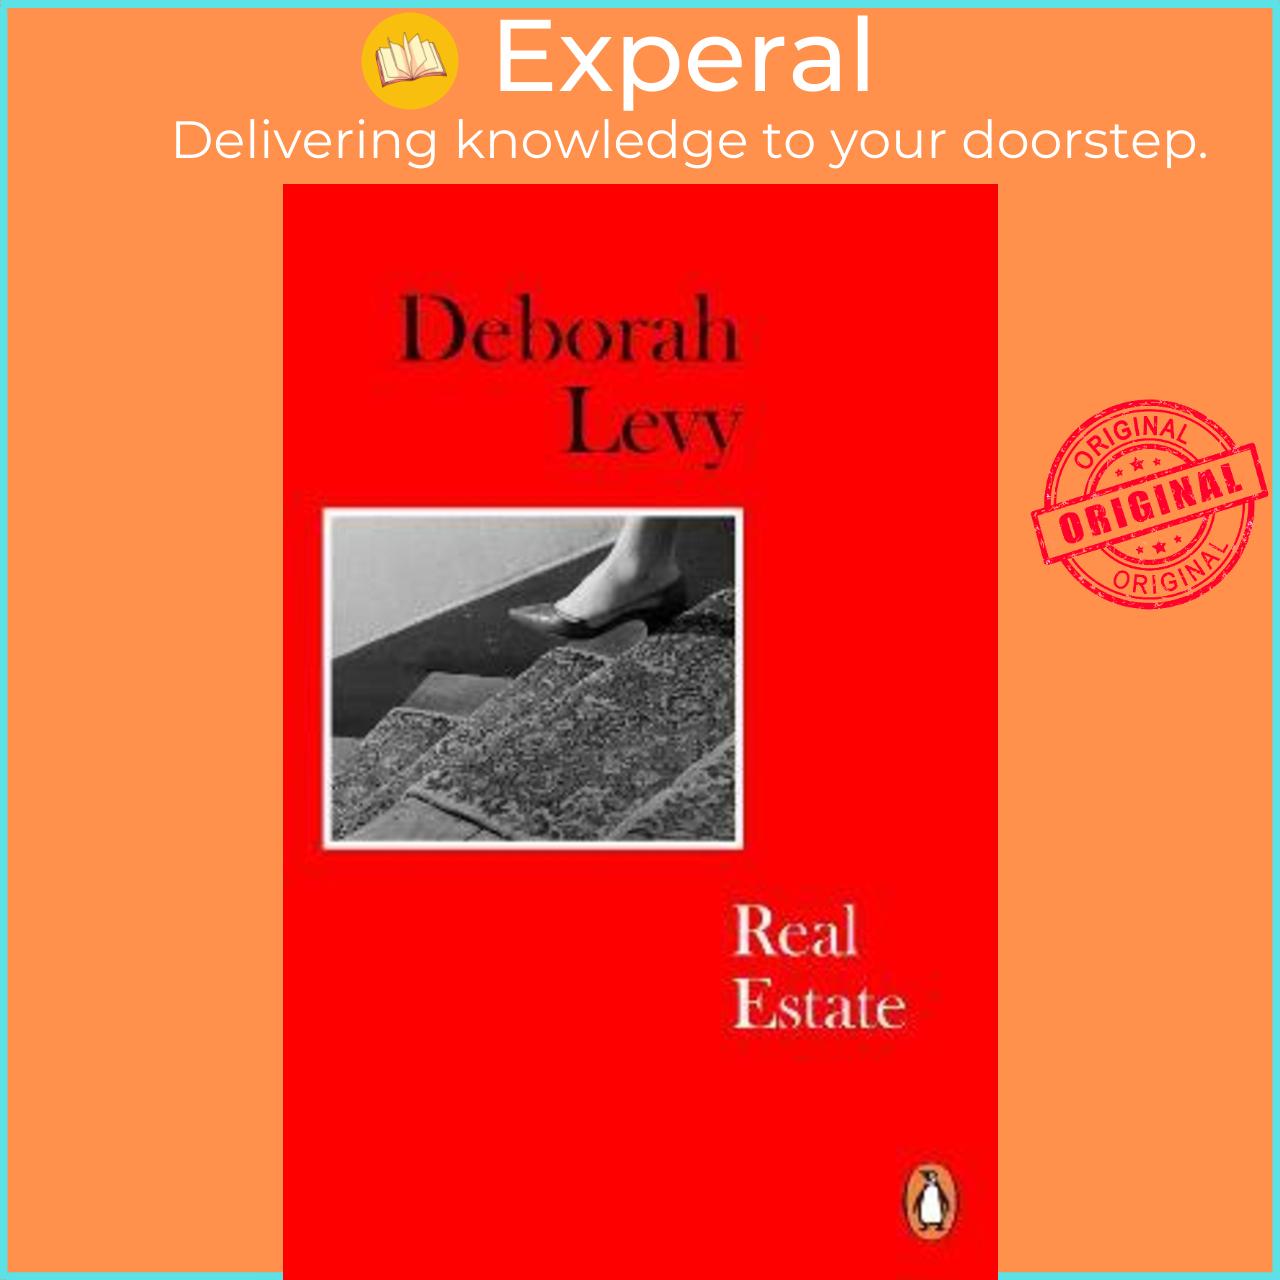 Sách - Real Estate : Living Autobiography 3 by Deborah Levy (UK edition, paperback)